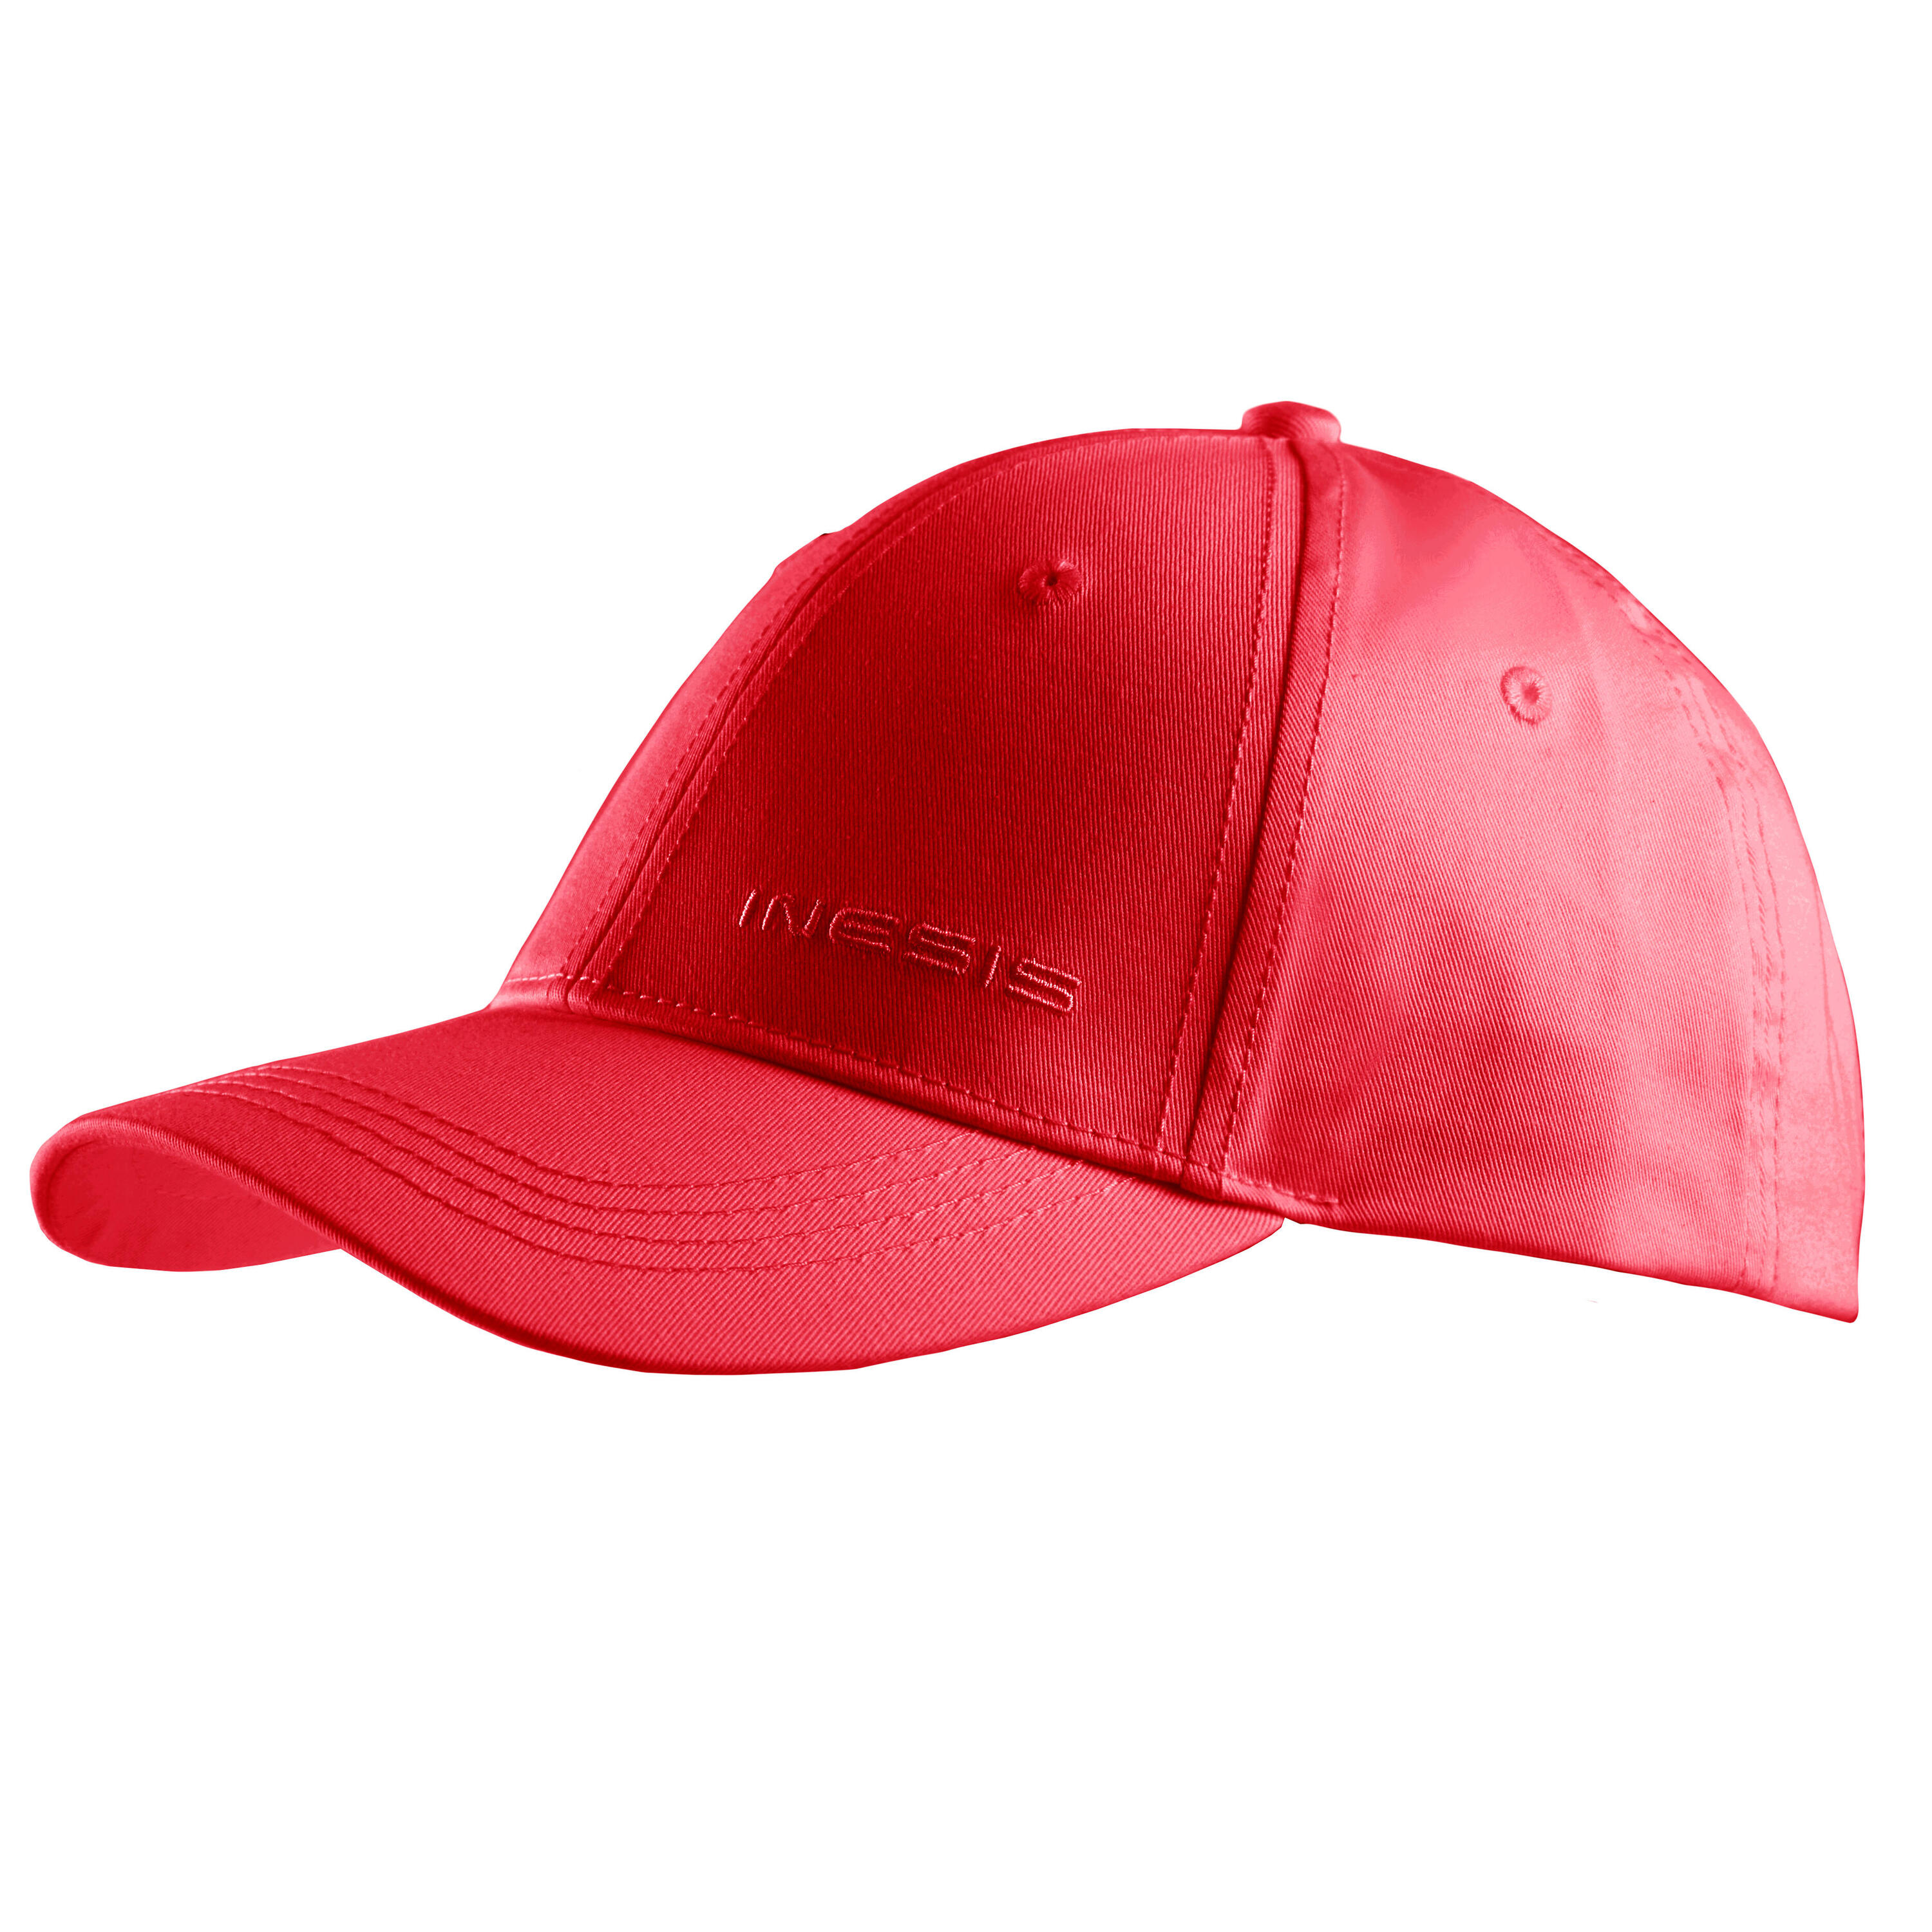 Adult's golf cap - MW 500 red 1/3